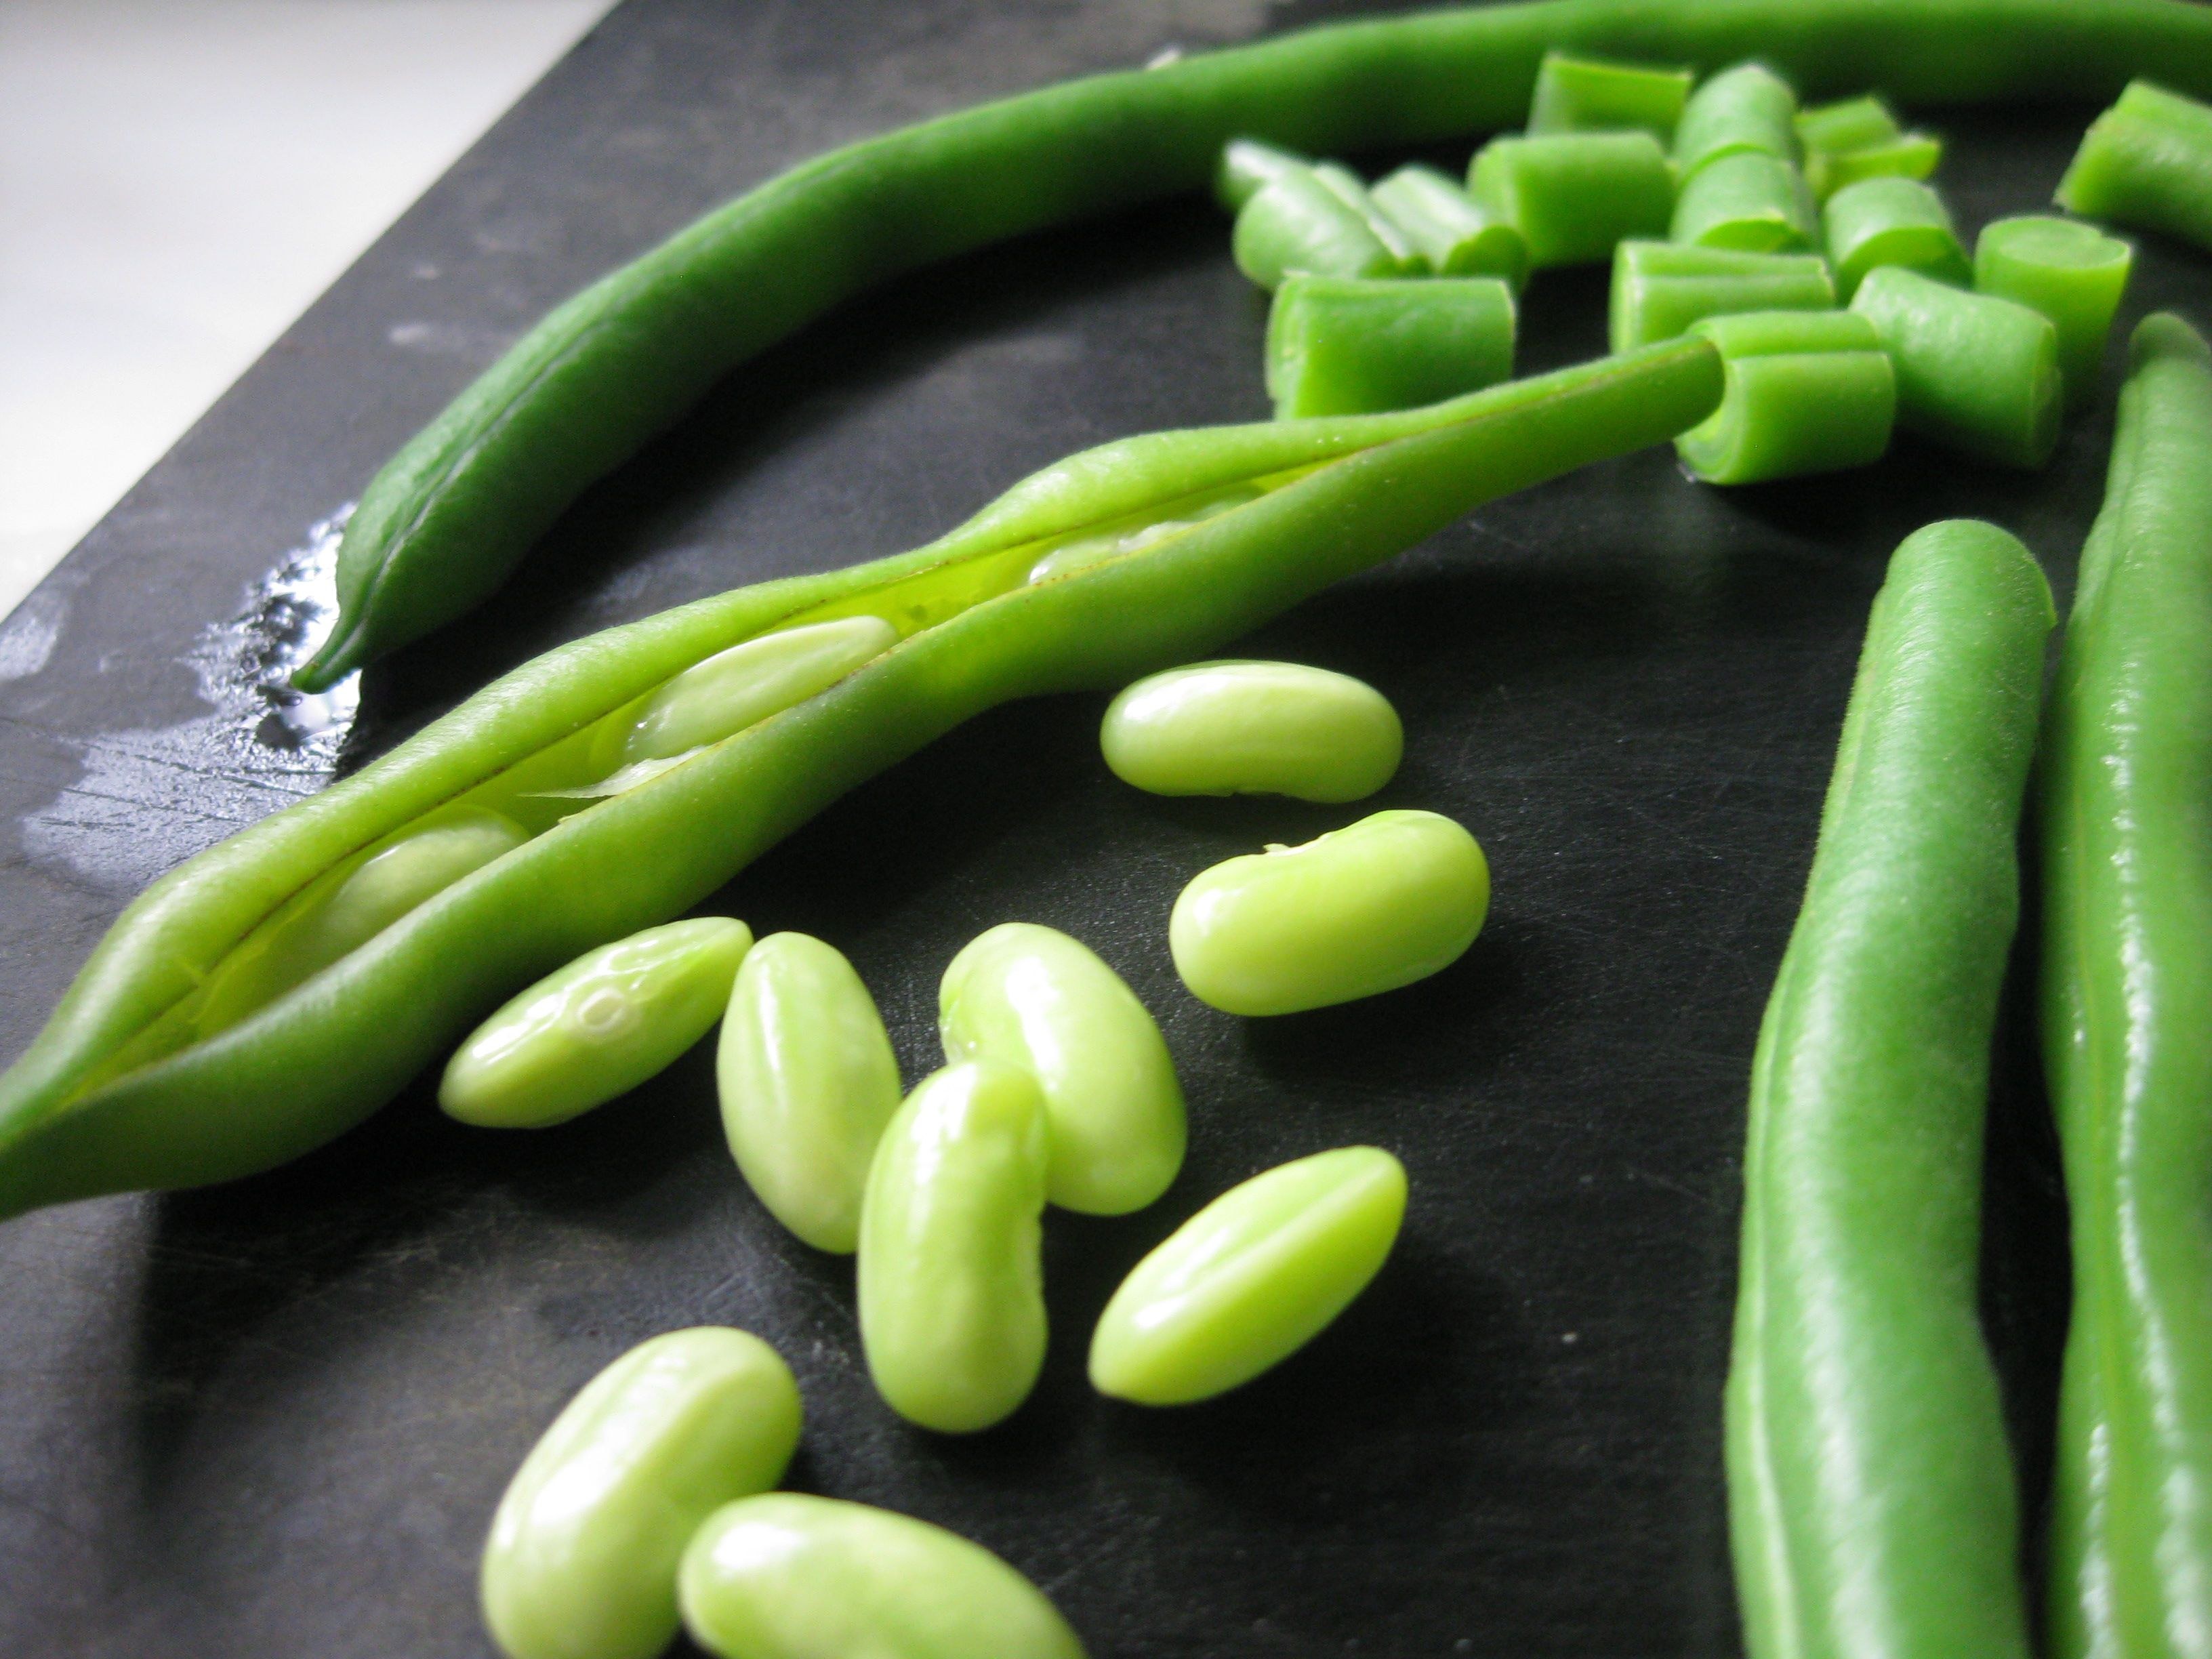 Some beans. Фасоль стручковая спаржевая зеленая. Бобы спаржевой фасоли. Фасоль стручковая Green. Фасоль спаржевая зеленая семена.